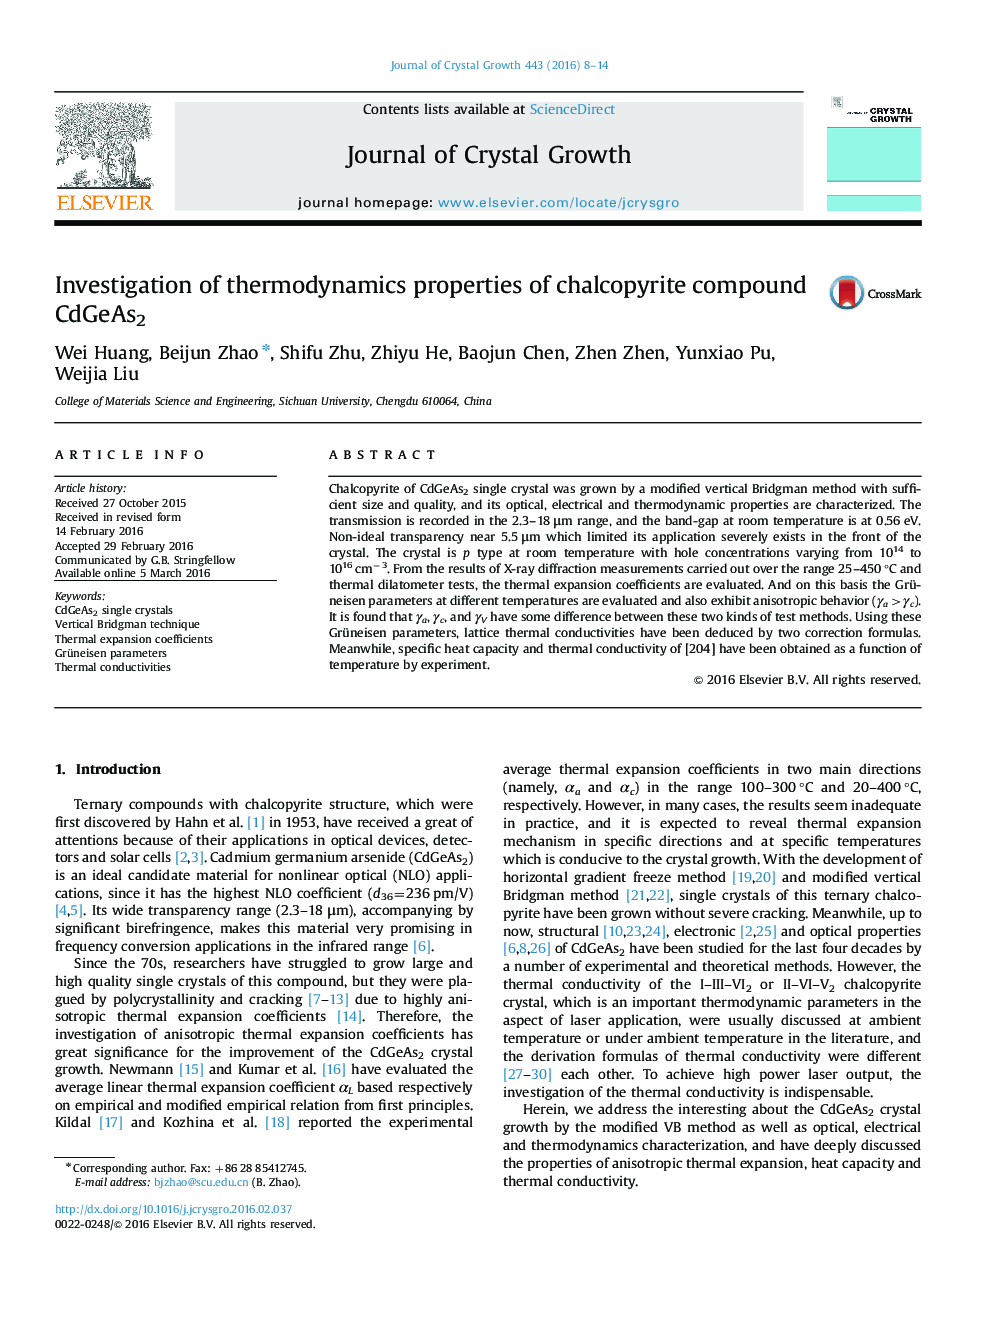 Investigation of thermodynamics properties of chalcopyrite compound CdGeAs2